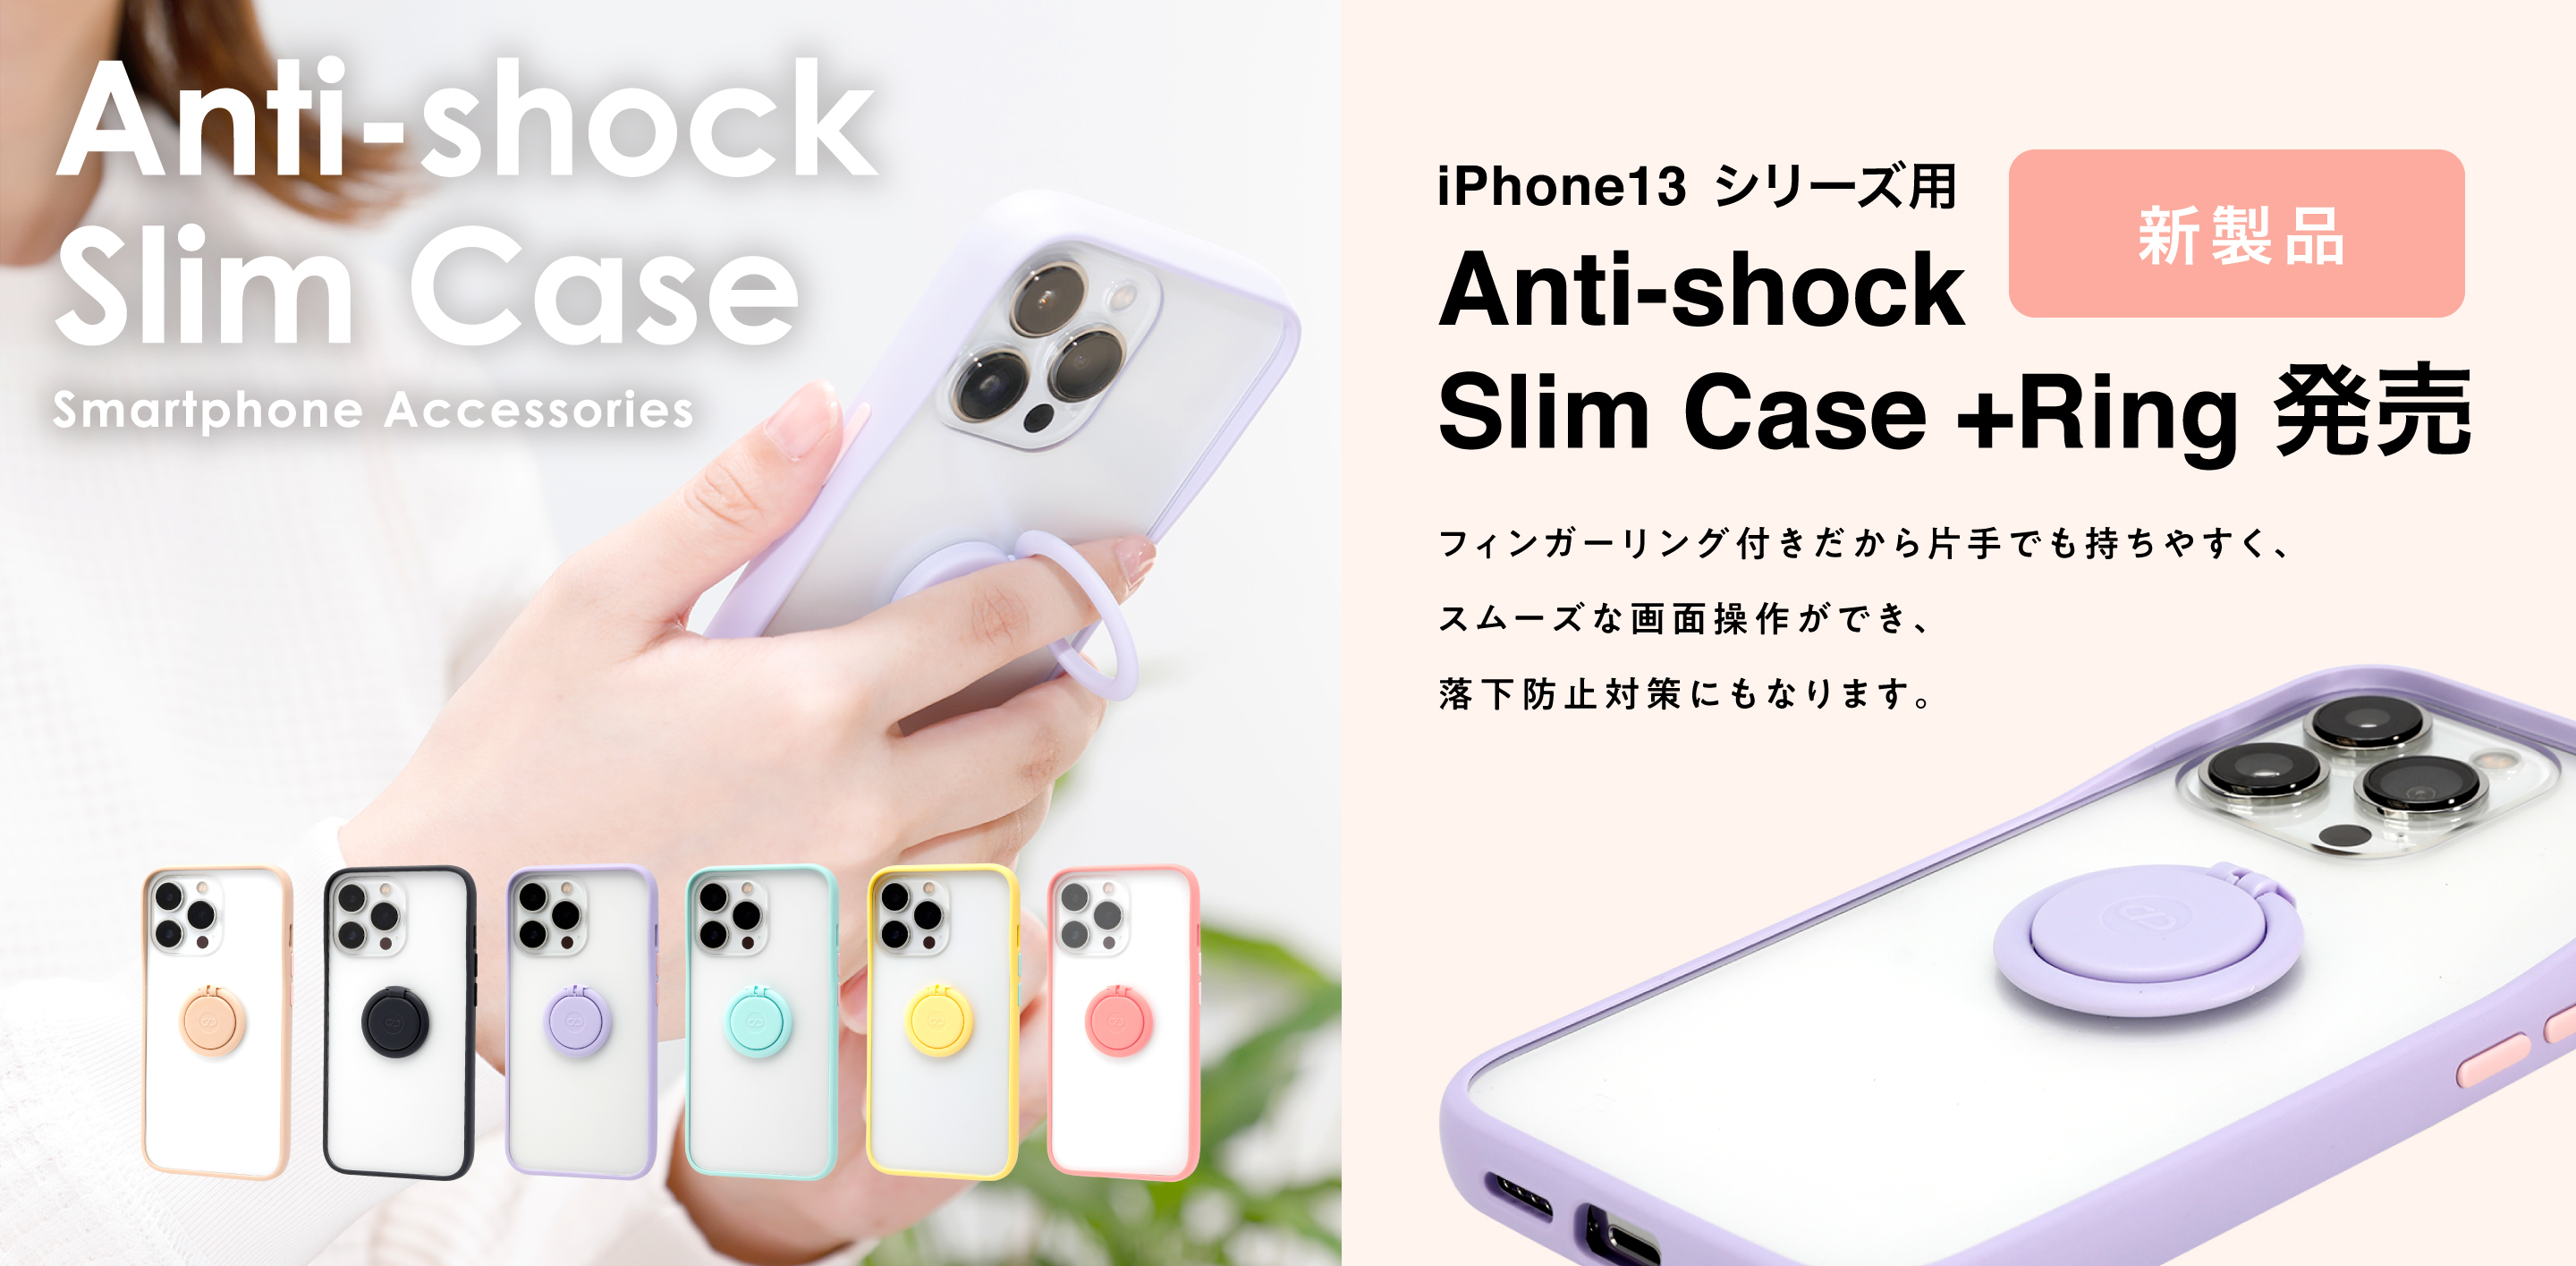 iPhone13シリーズ用Anti-shock Slim Case + Ring発売